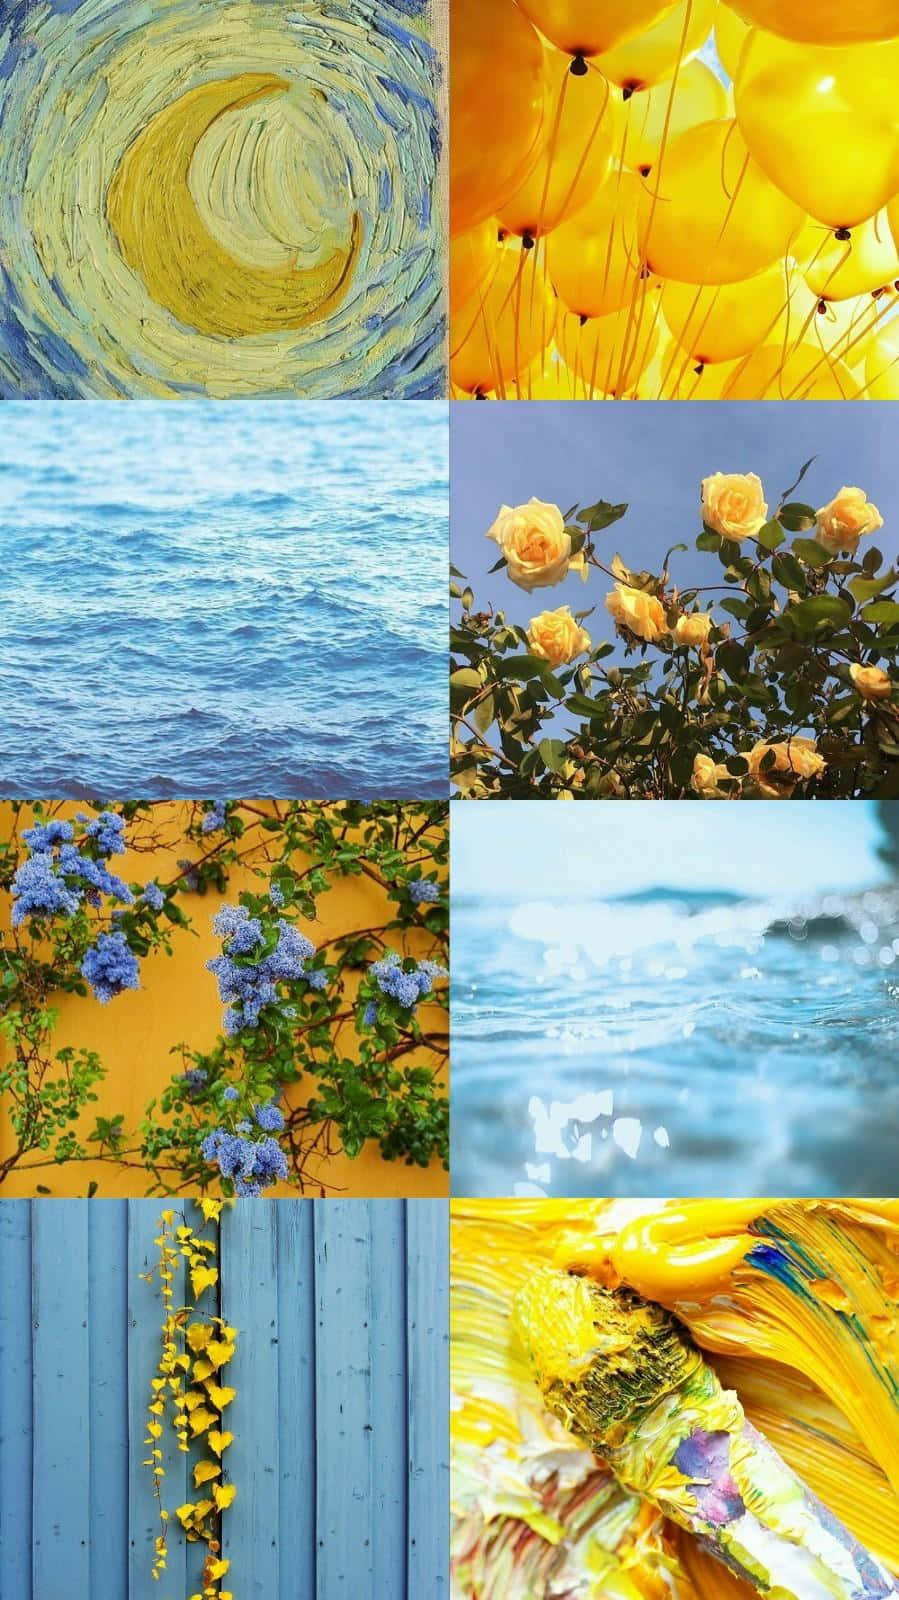 Fondode Pantalla De Collage De Fotos Con Pinturas De Flores En Azul Y Amarillo.